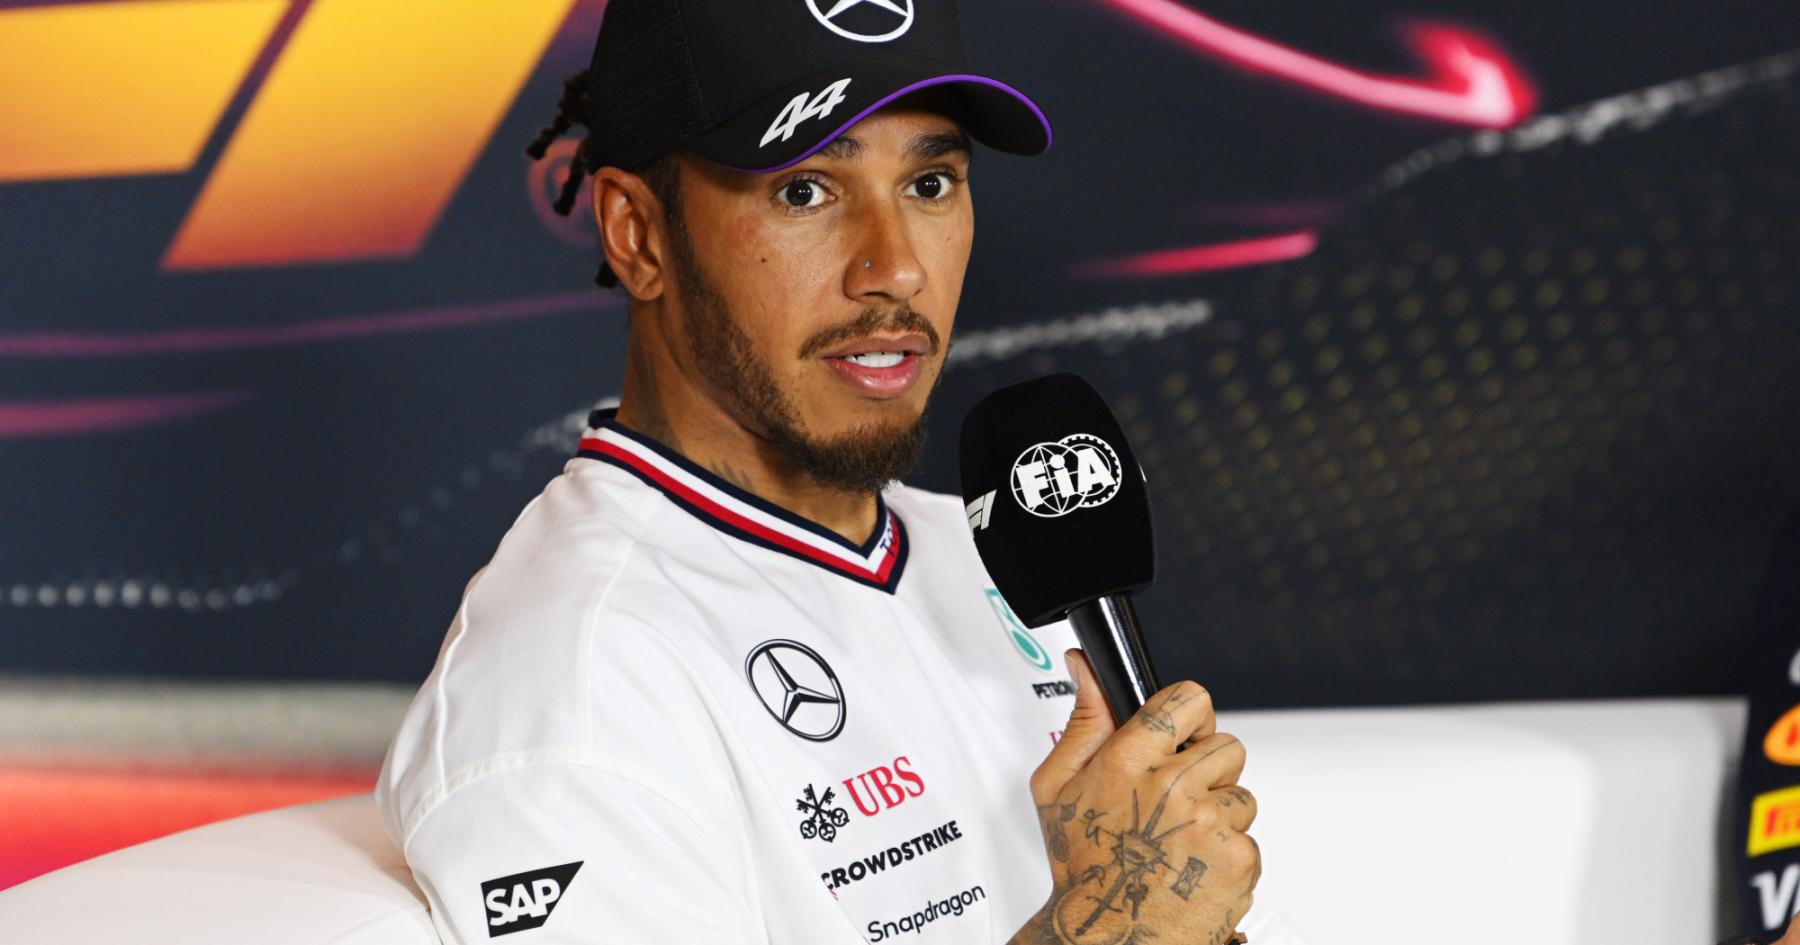 Hamilton's Bittersweet Departure: A 'Strange' Transition for Mercedes Champion